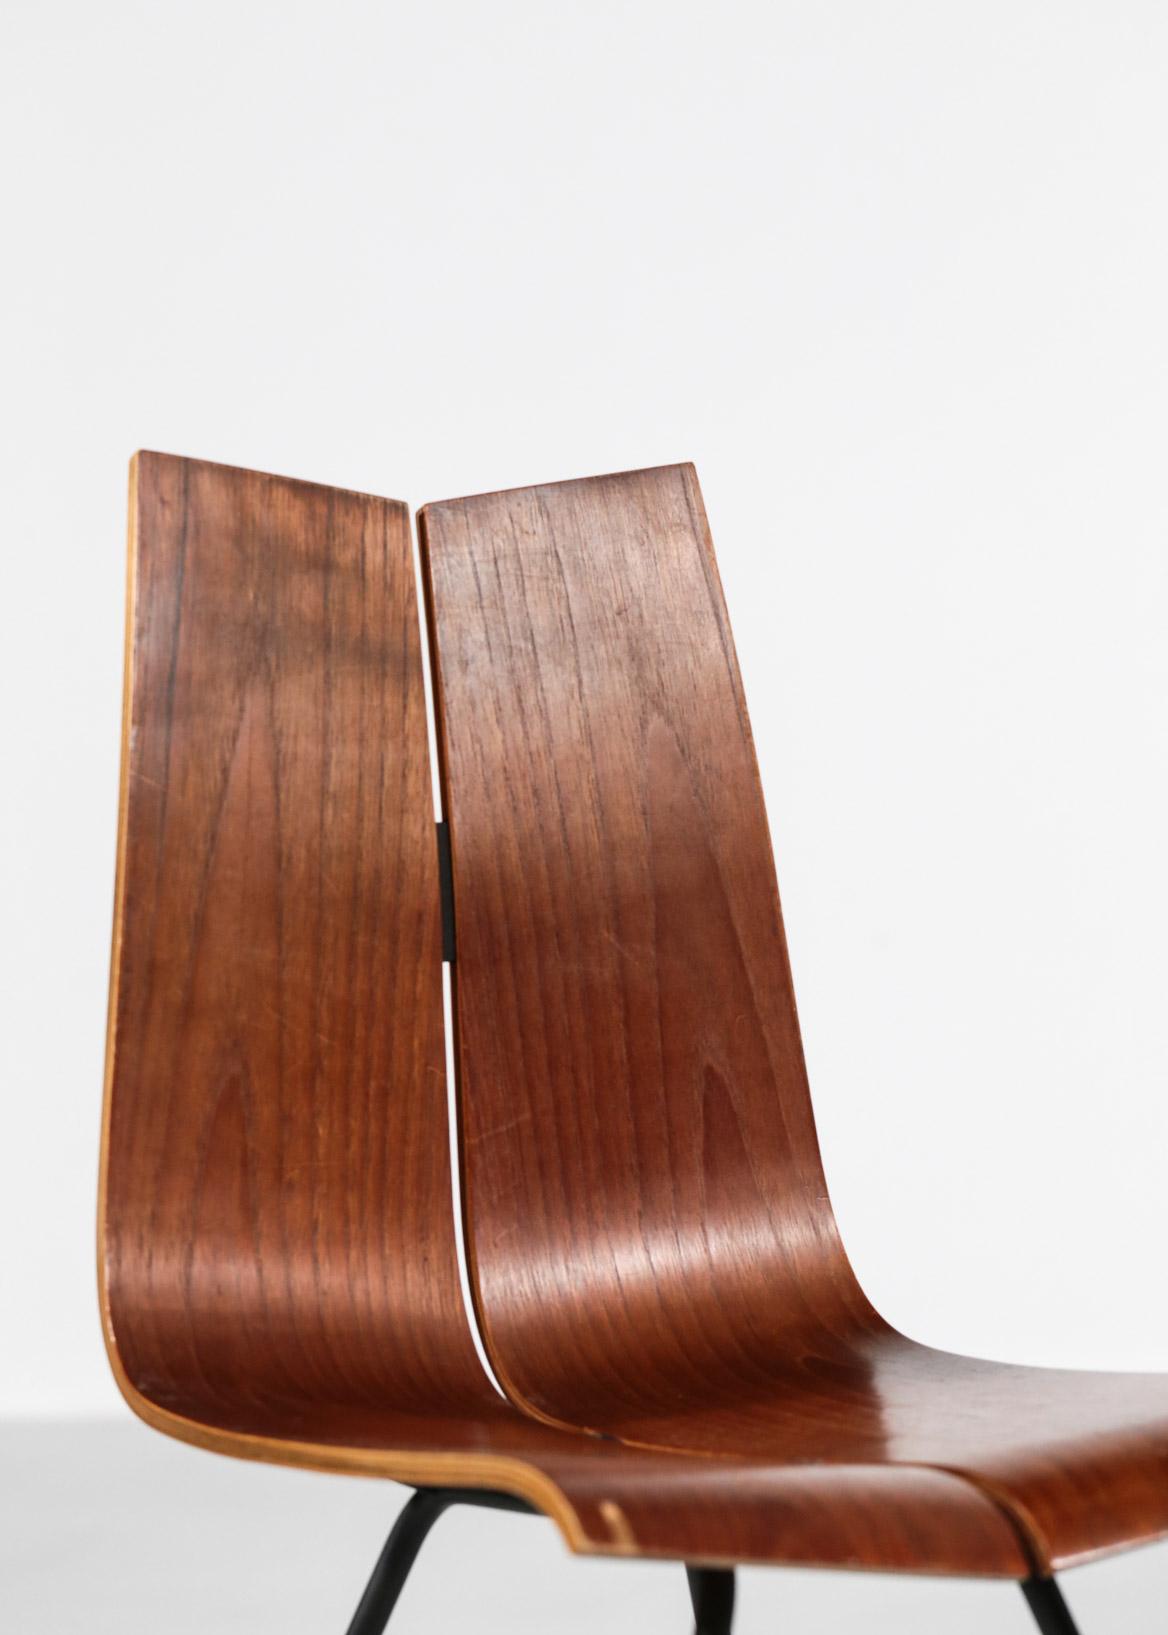 Mid-20th Century GA chair by Hans Bellmann, Suisse Design, 1960s For Sale